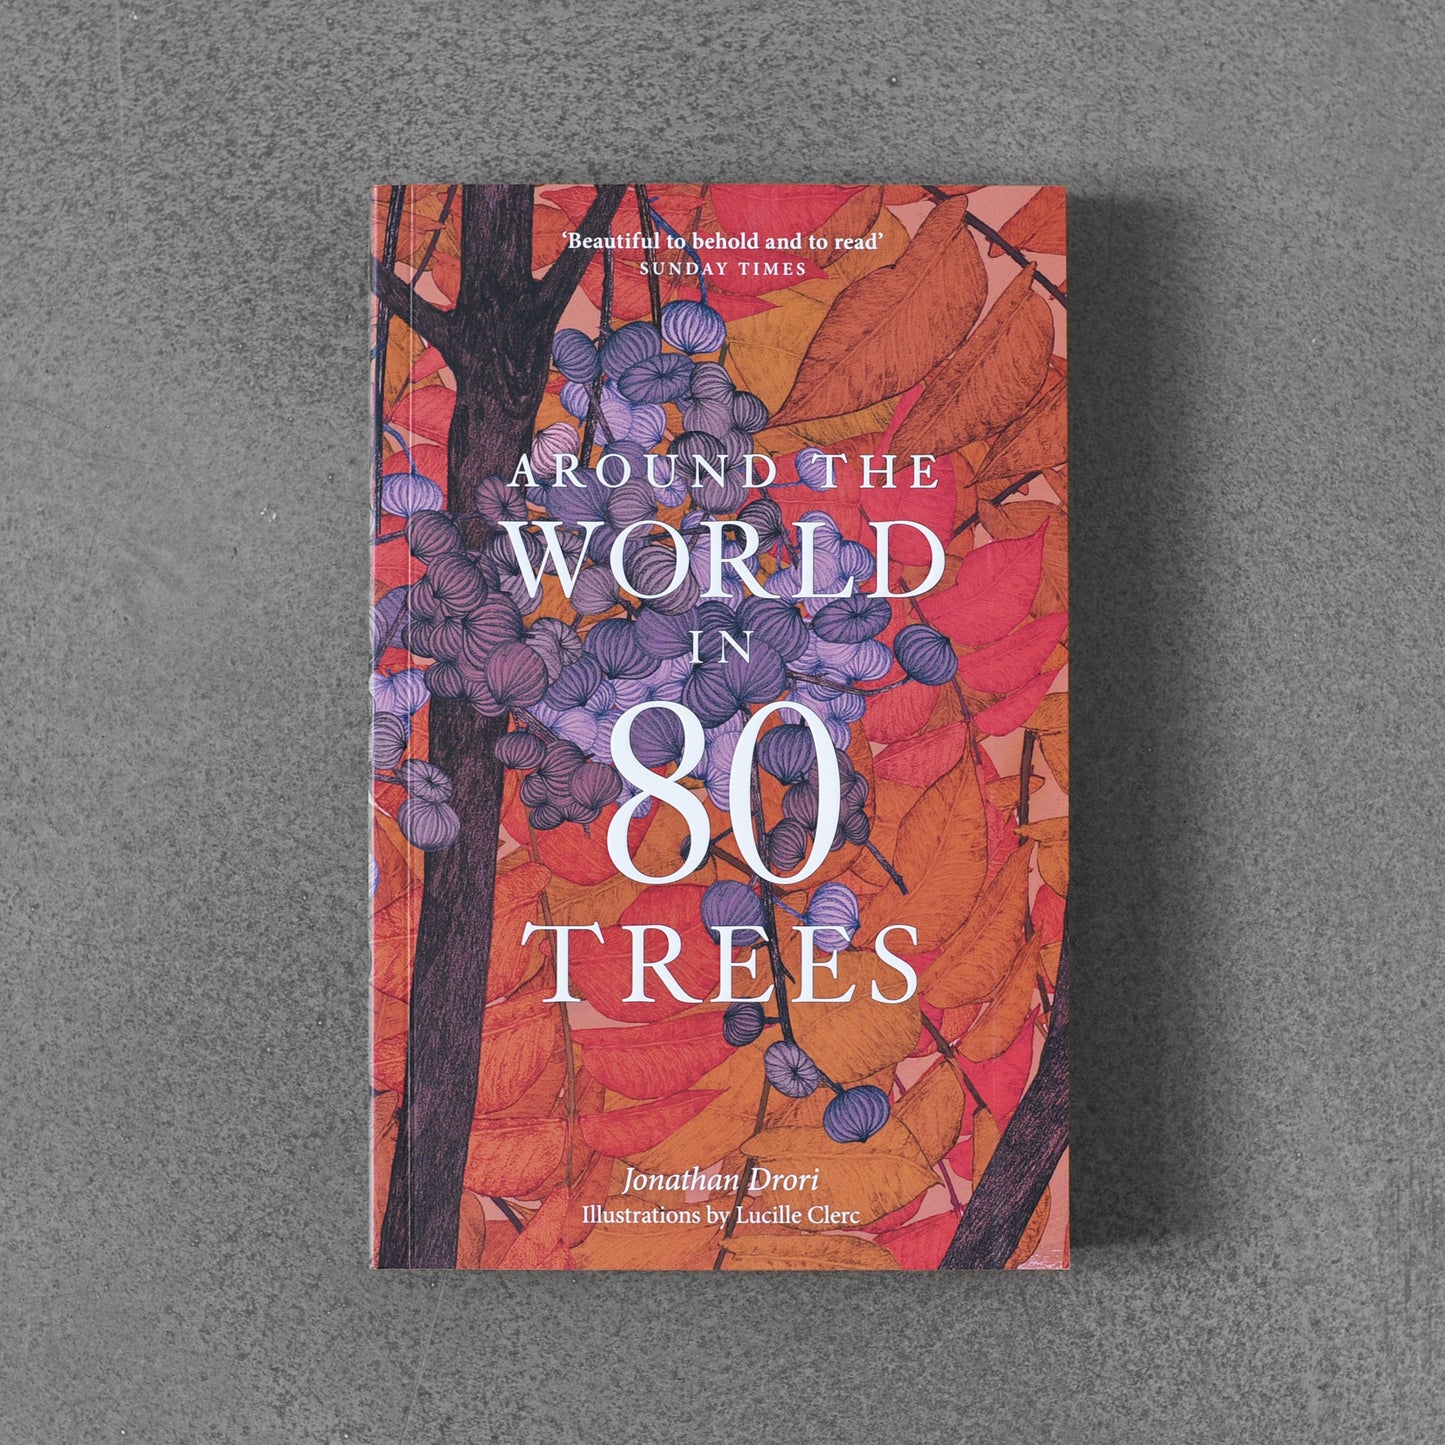 Around the World in 80 Trees - Jonathan Drori